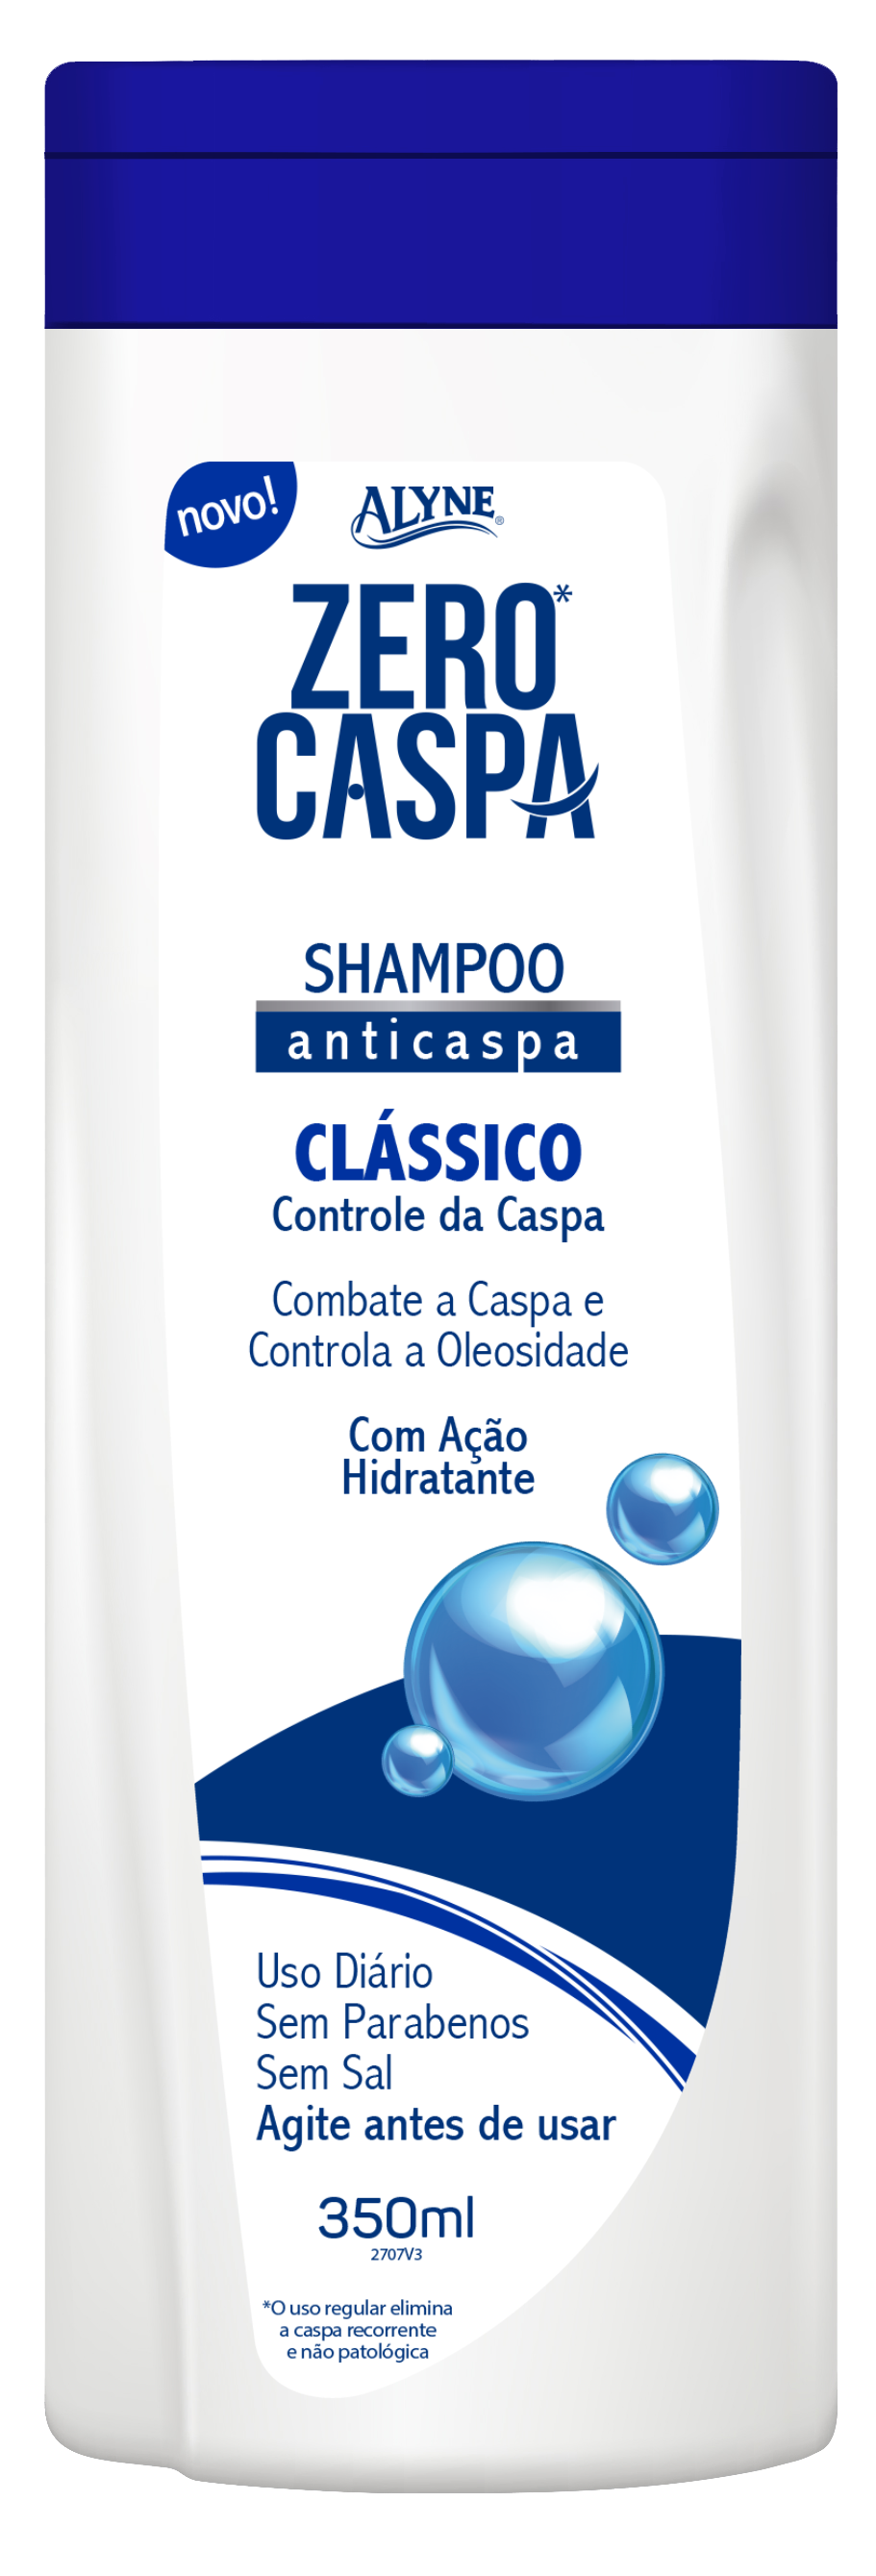 Shampoo Alyne Zero Caspa Clássico 350ml